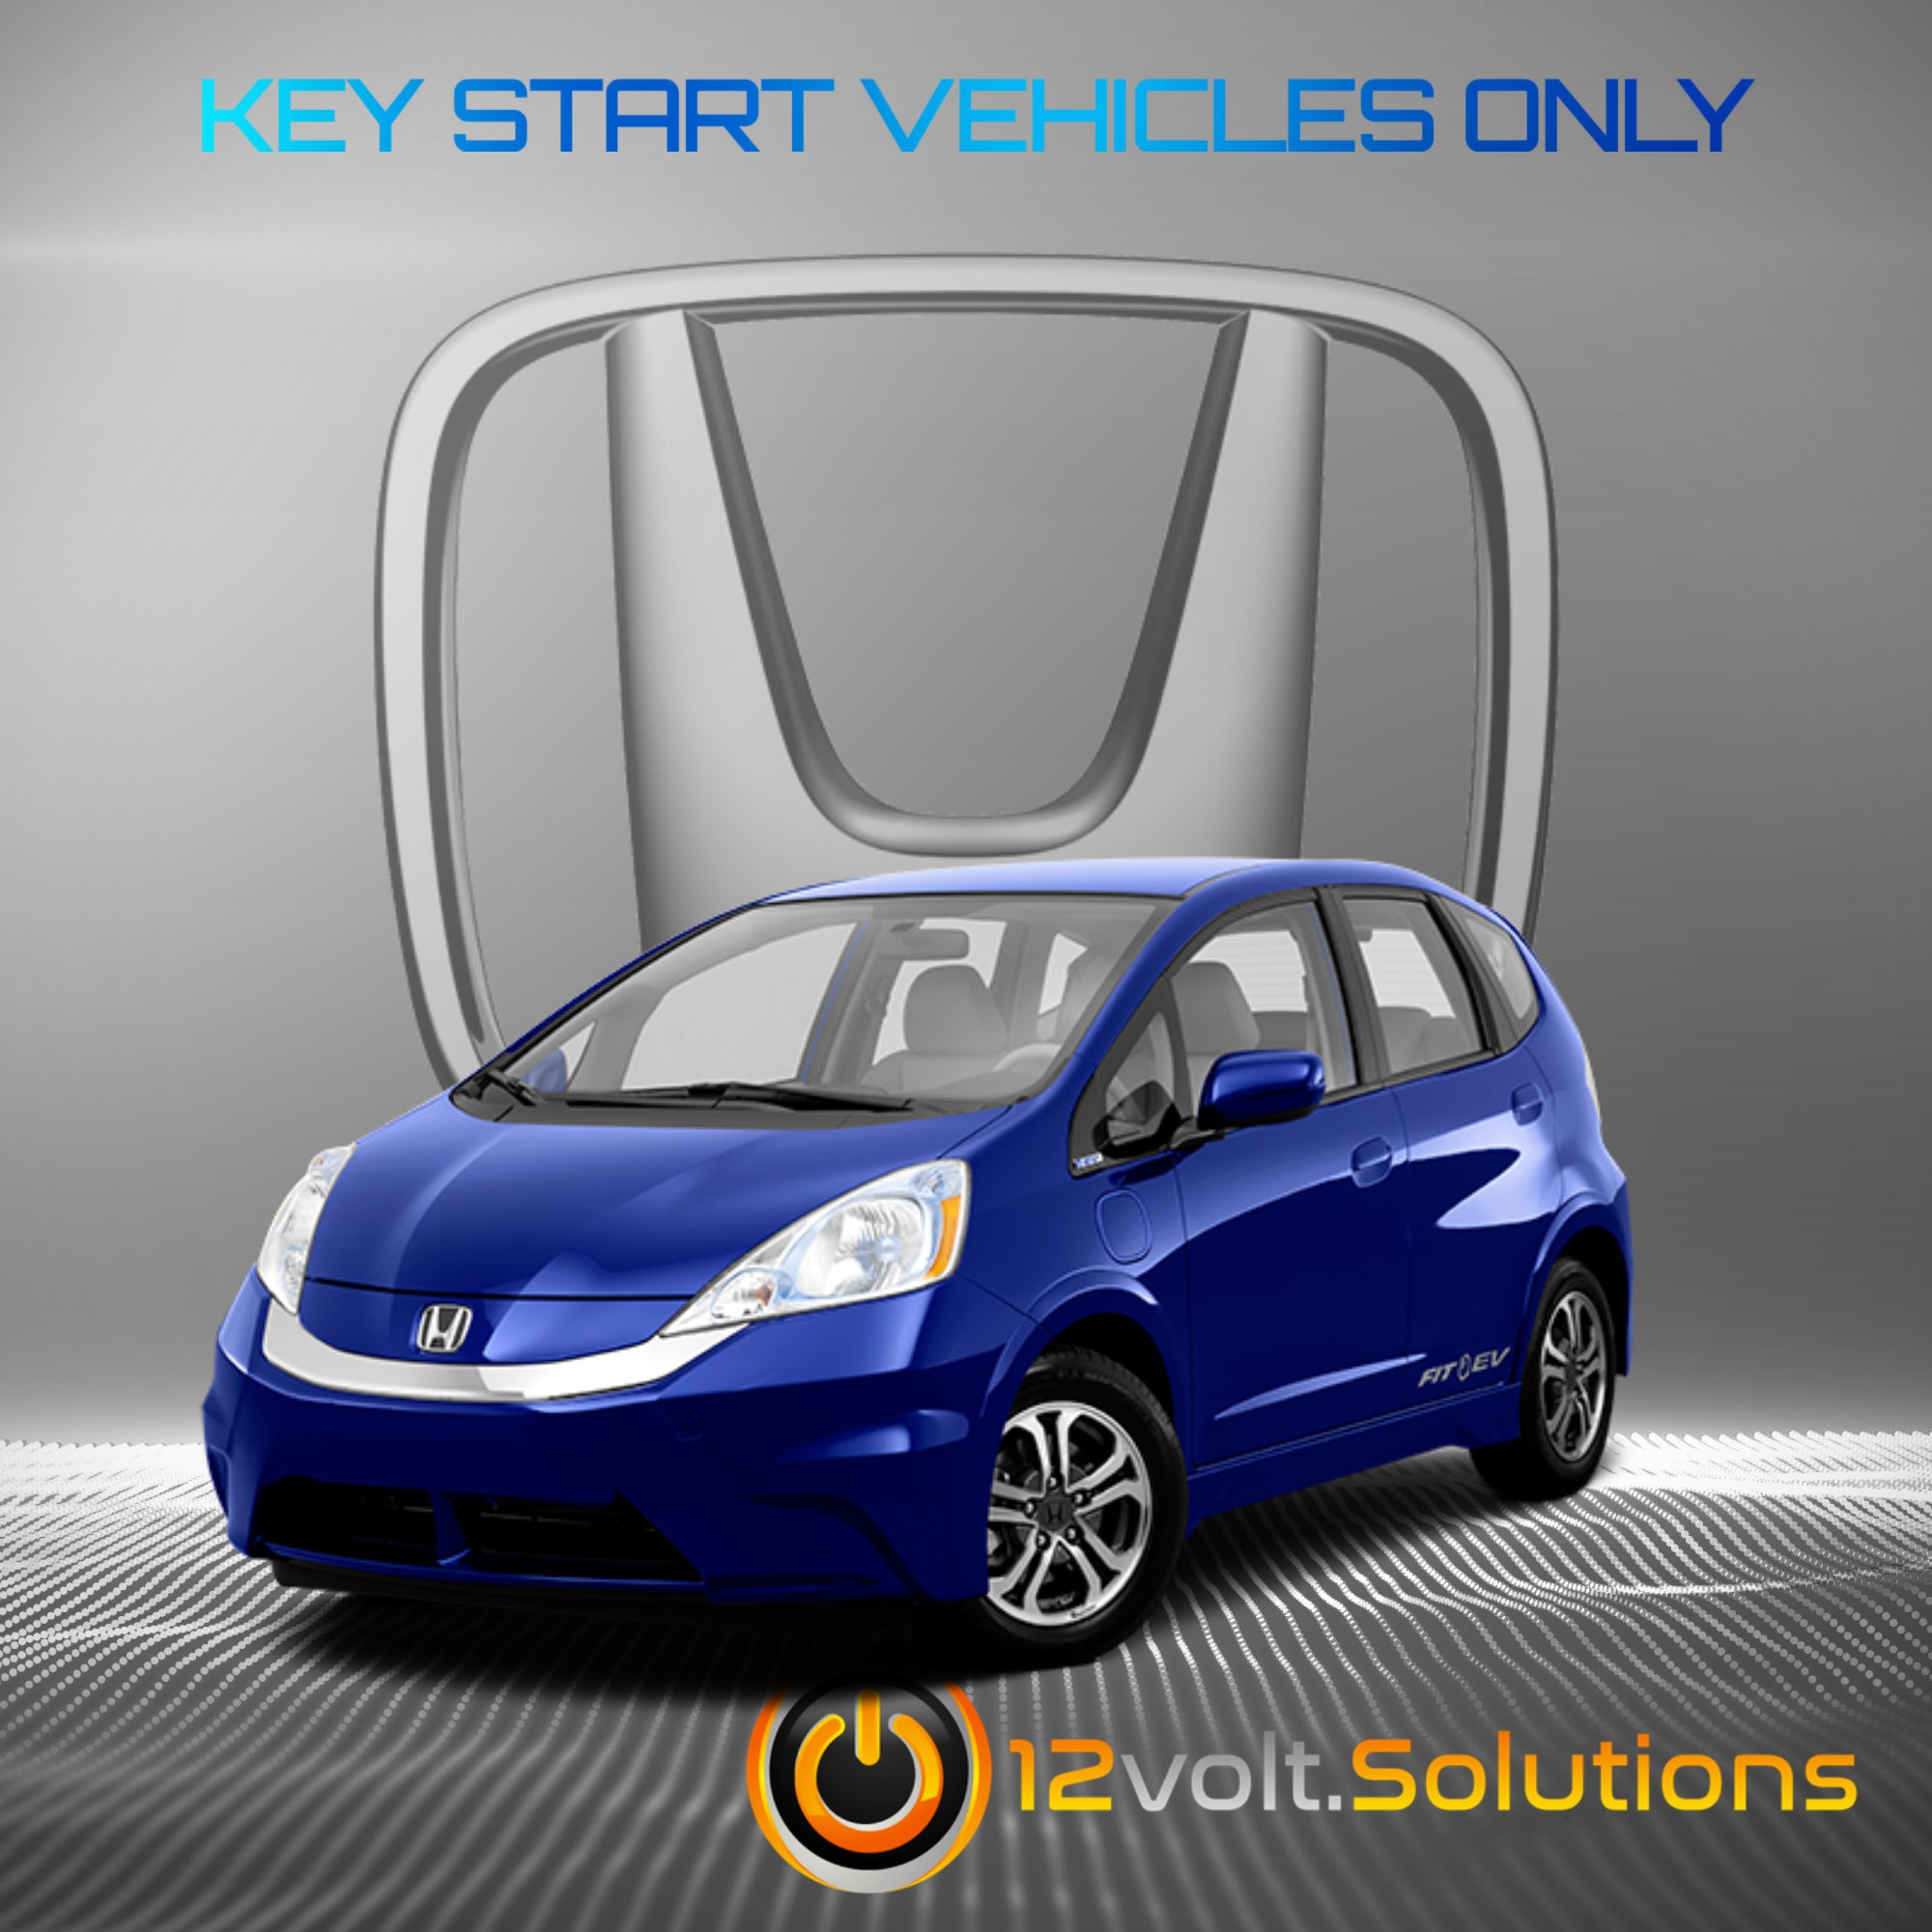 2009-2014 Honda Fit Plug & Play Remote Start Kit (standard key)-12Volt.Solutions